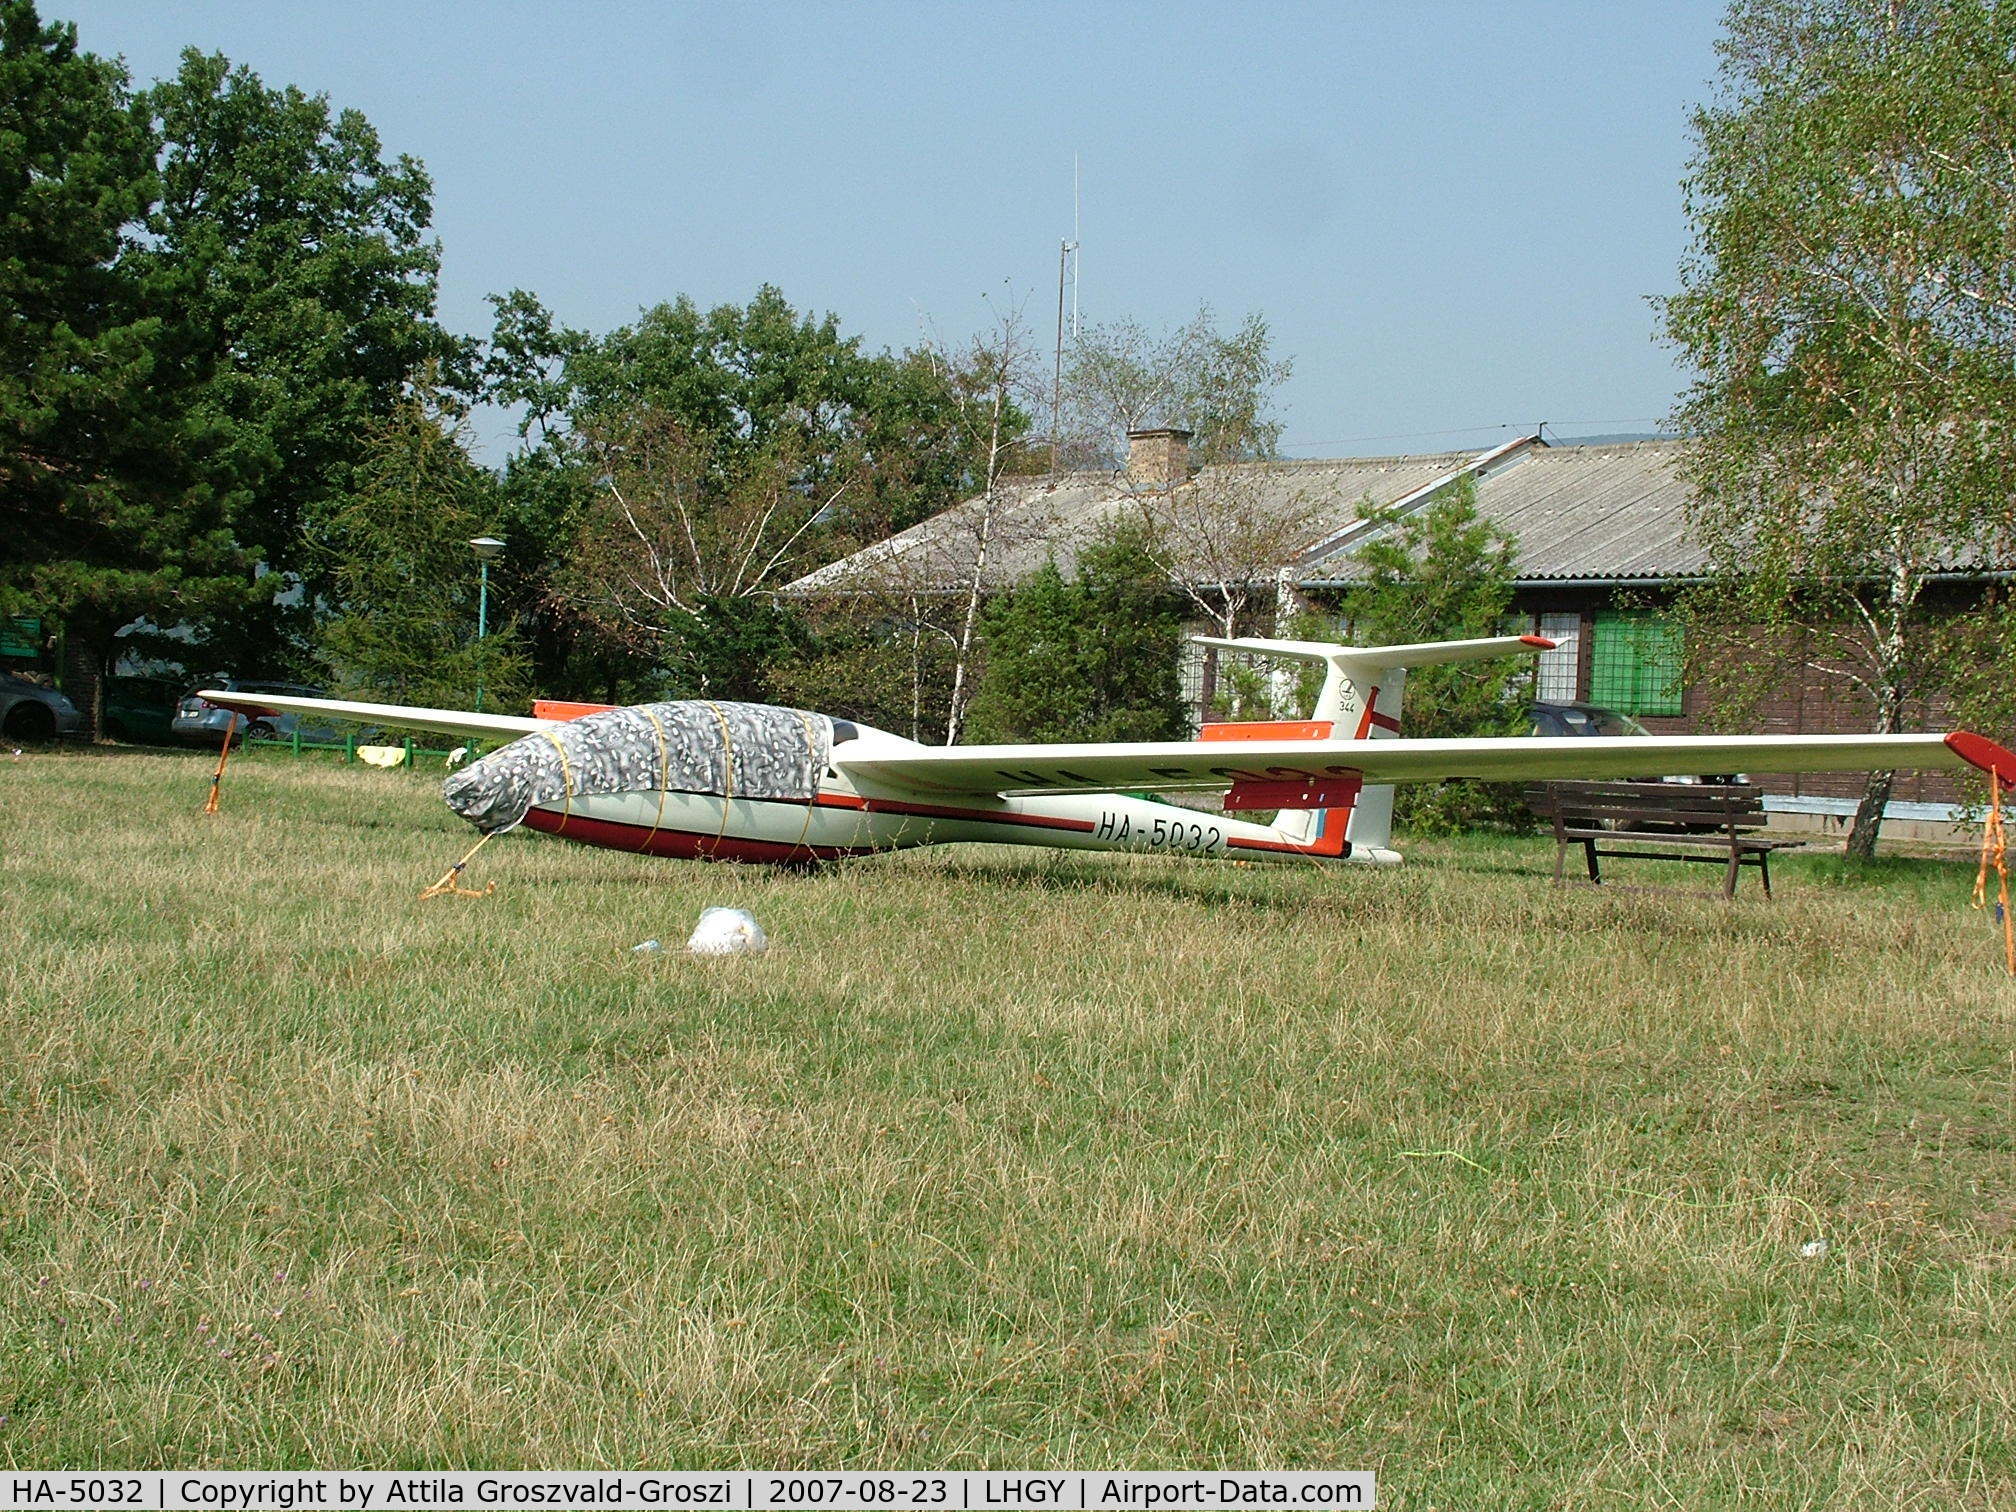 HA-5032, 1981 ICA-Brasov IS-28B2 C/N 344, Gyöngyös-Pipishegy Airfield, Hungary